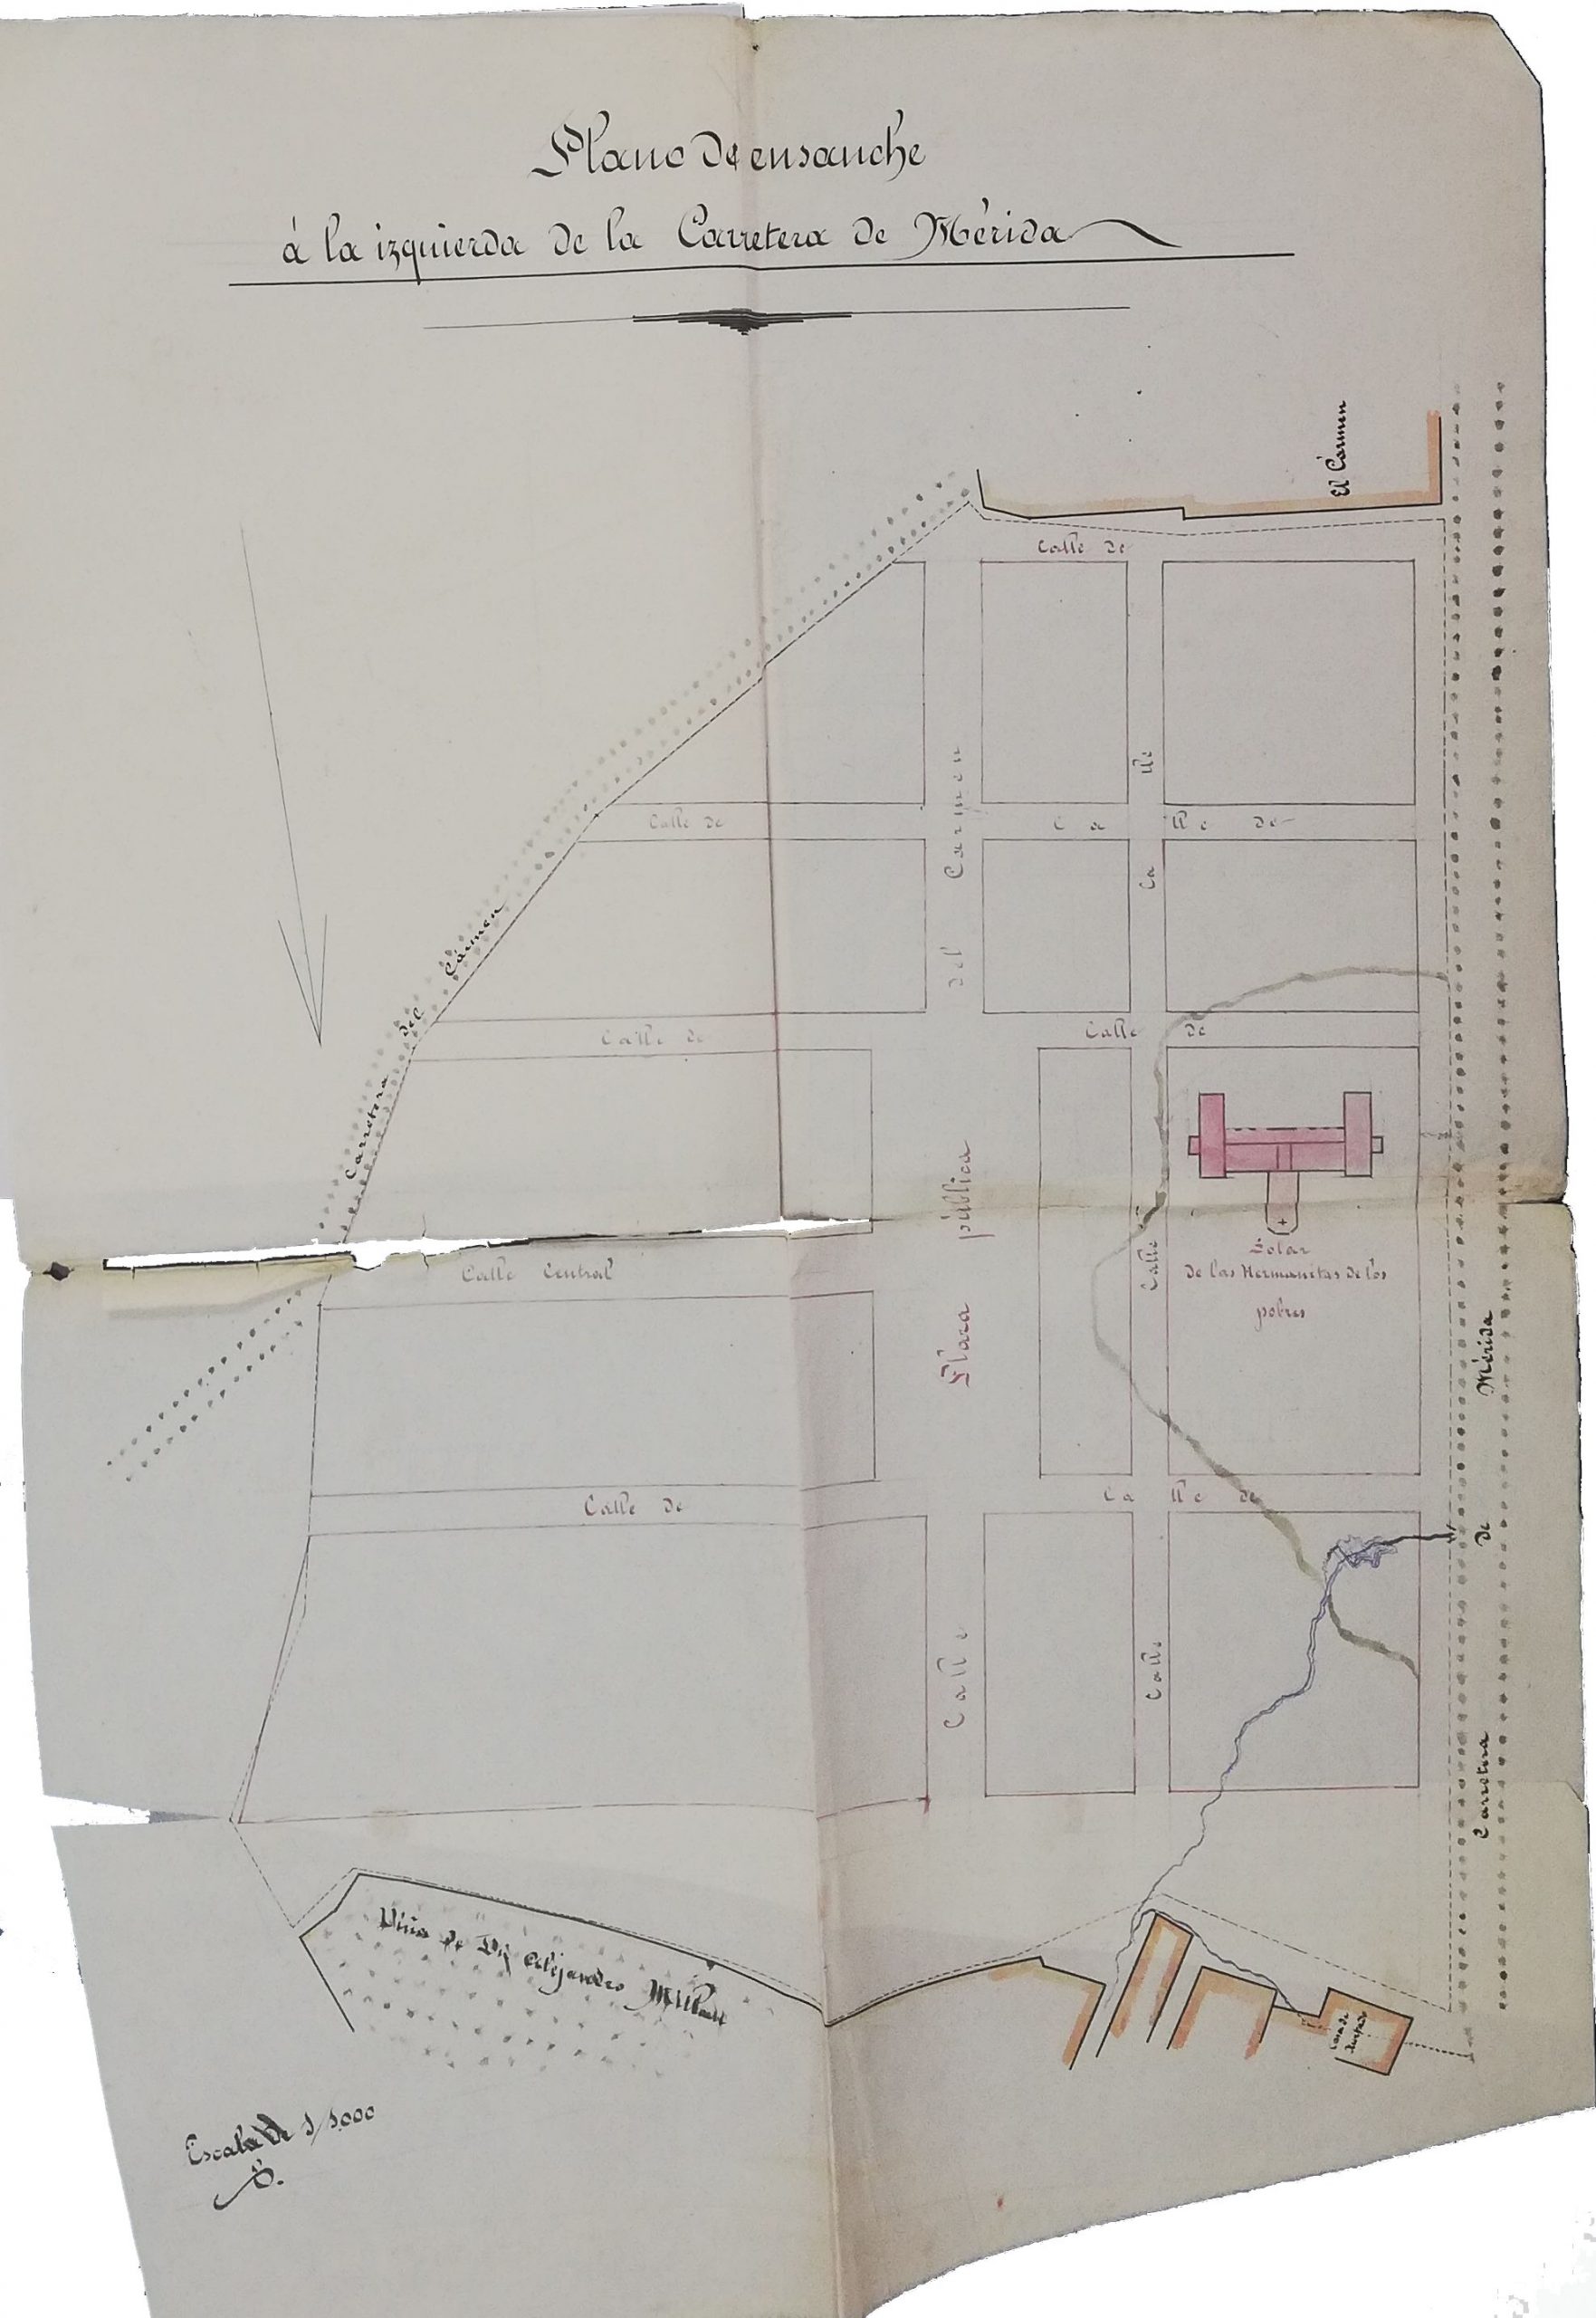 Plano del proyecto de ensanche de la carretera de Mérida de 1882